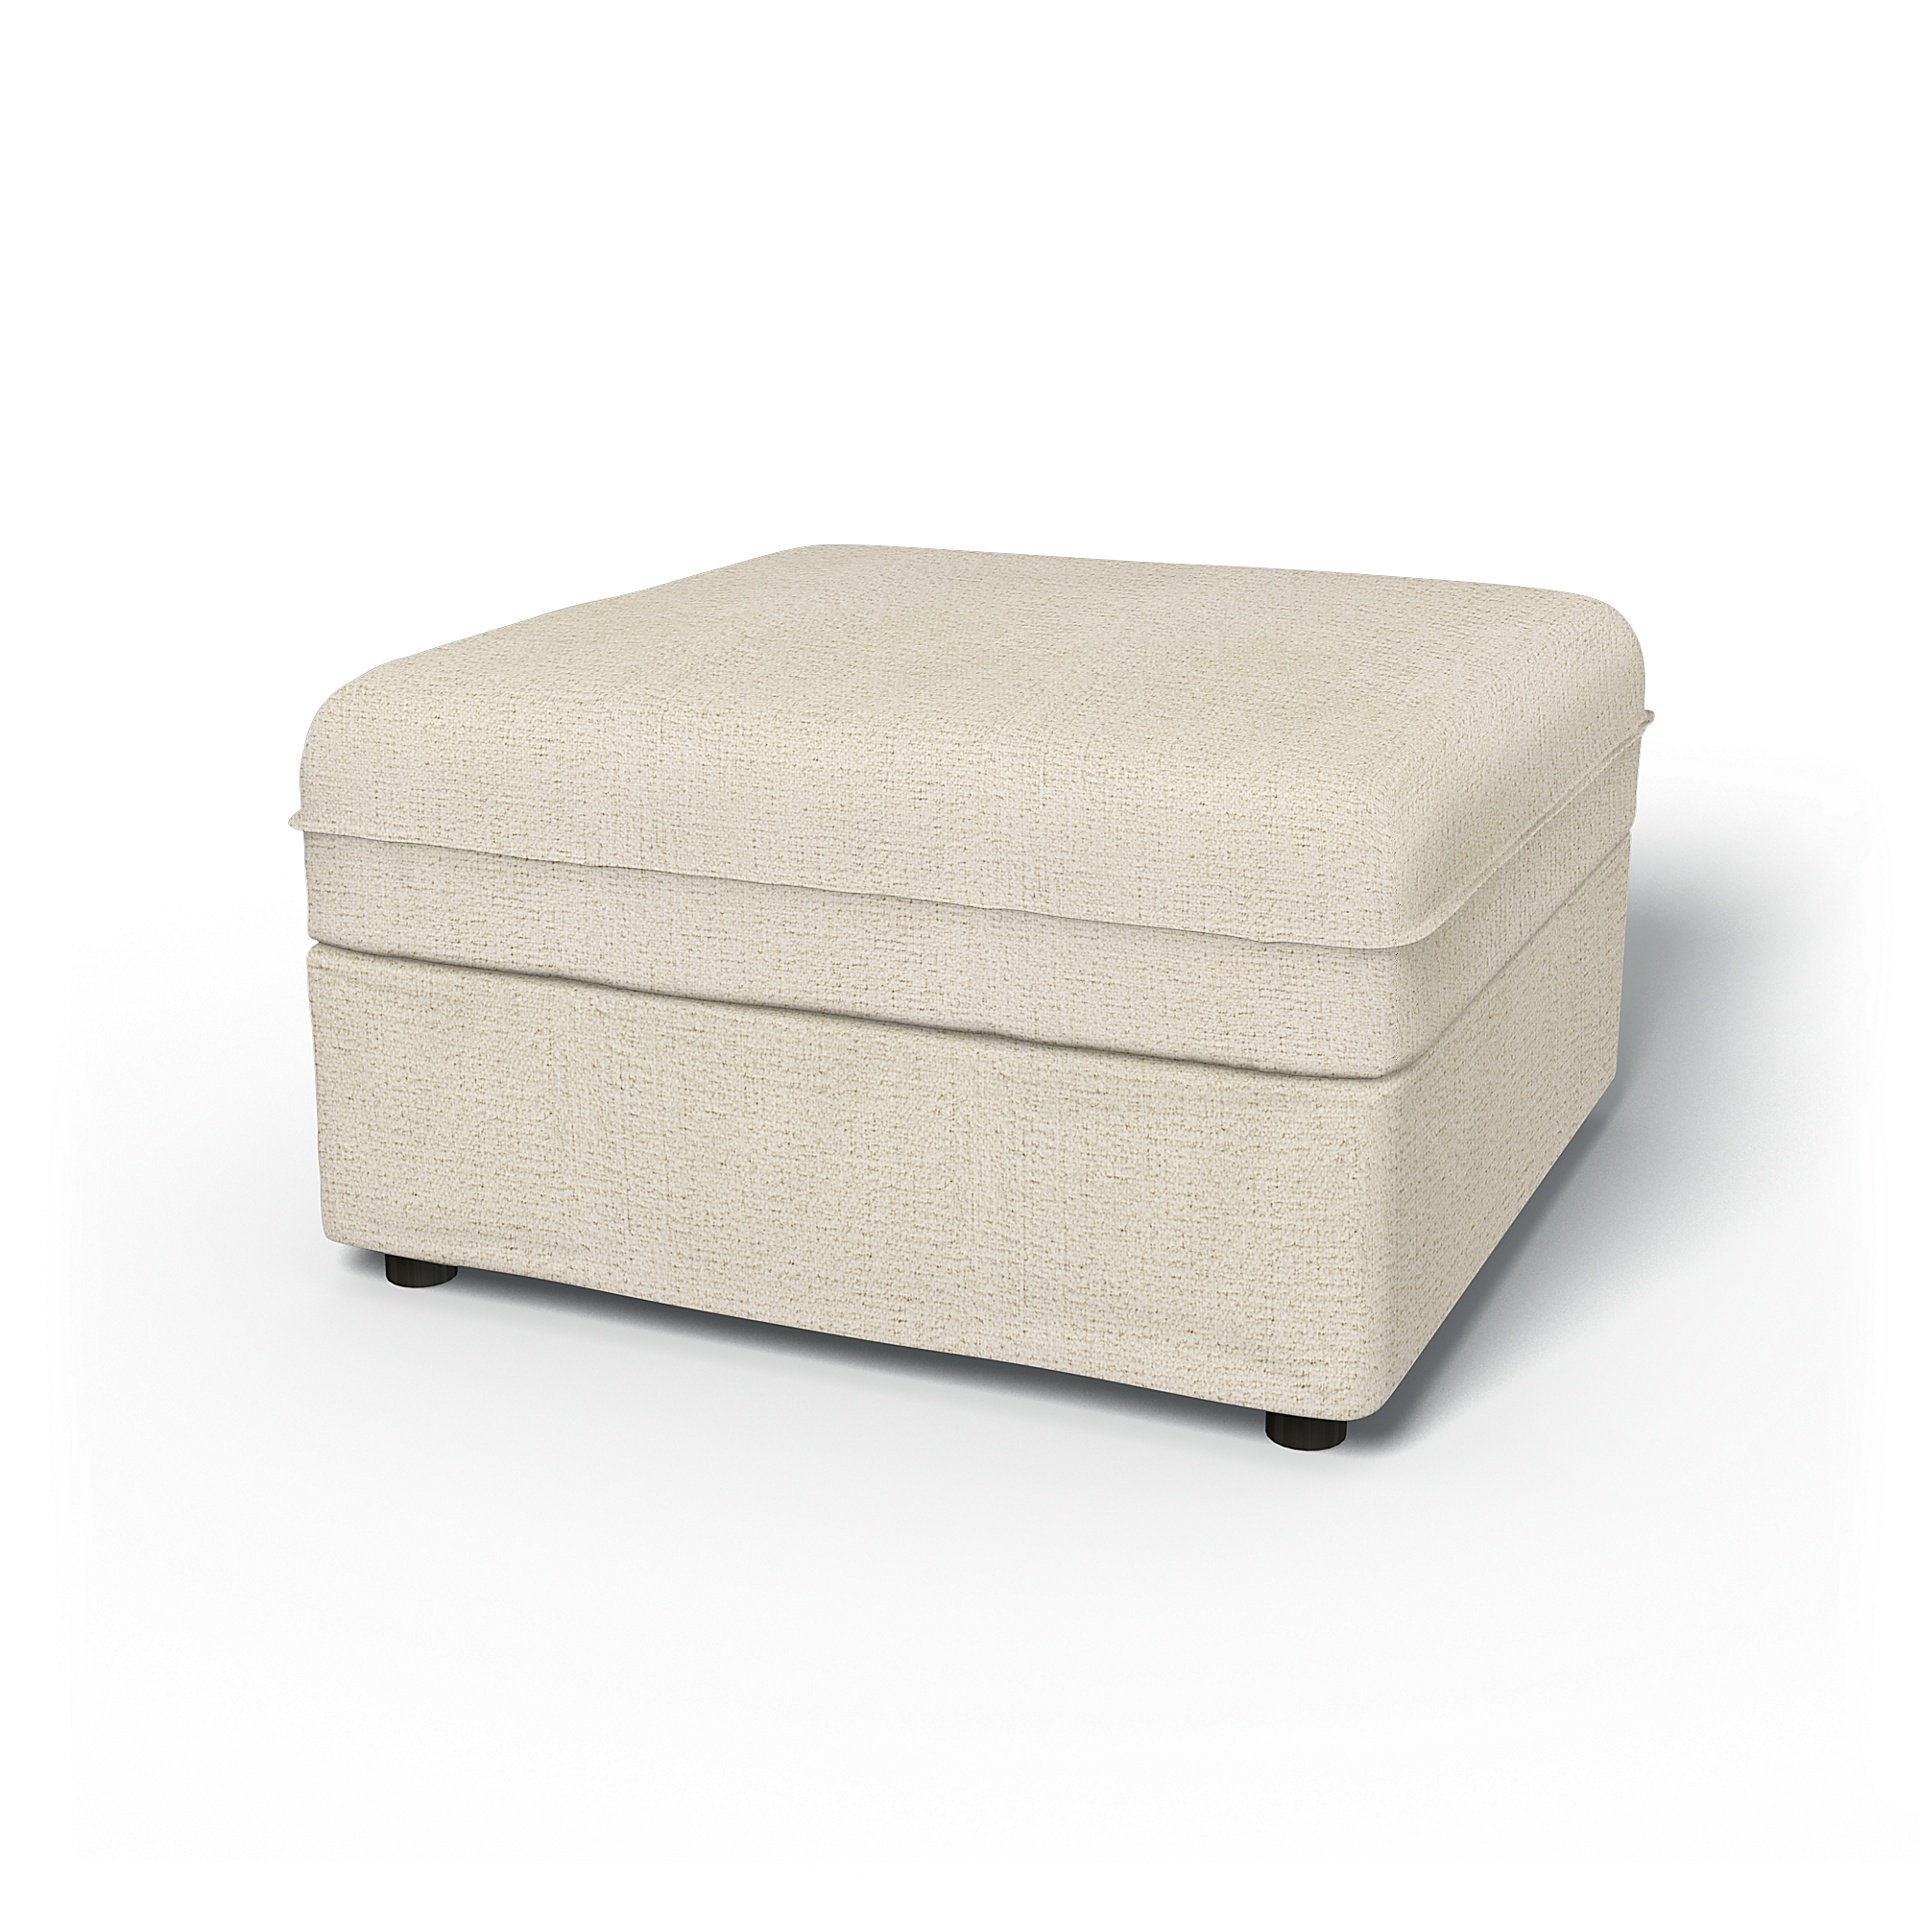 IKEA - Vallentuna Seat Module with Storage Cover 80x80cm 32x32in, Ecru, Boucle & Texture - Bemz